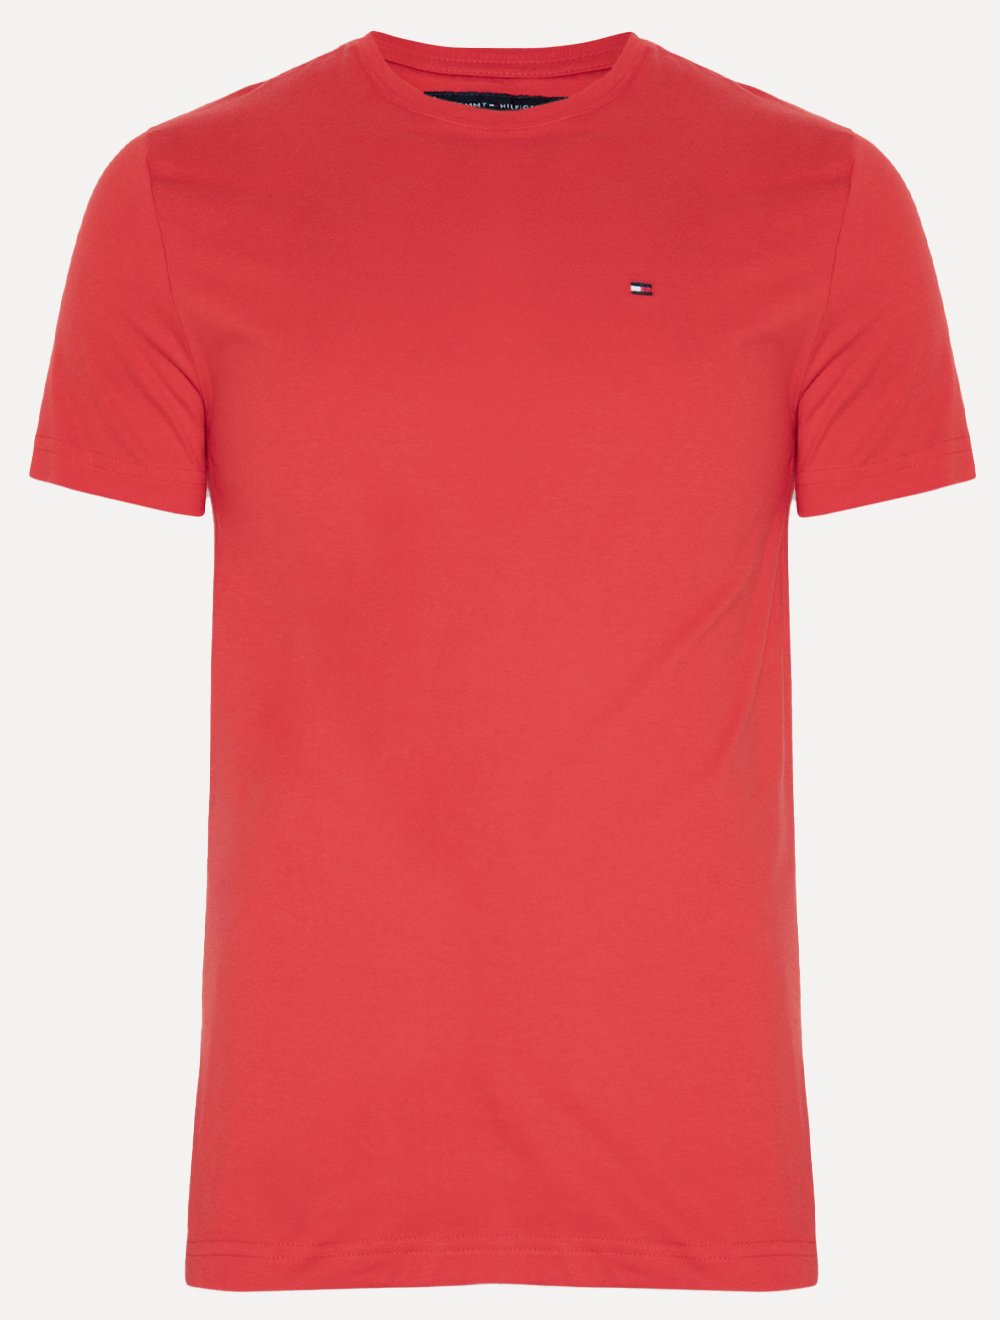 Camiseta Tommy Hilfiger Essential Cotton Vermelho Escarlate